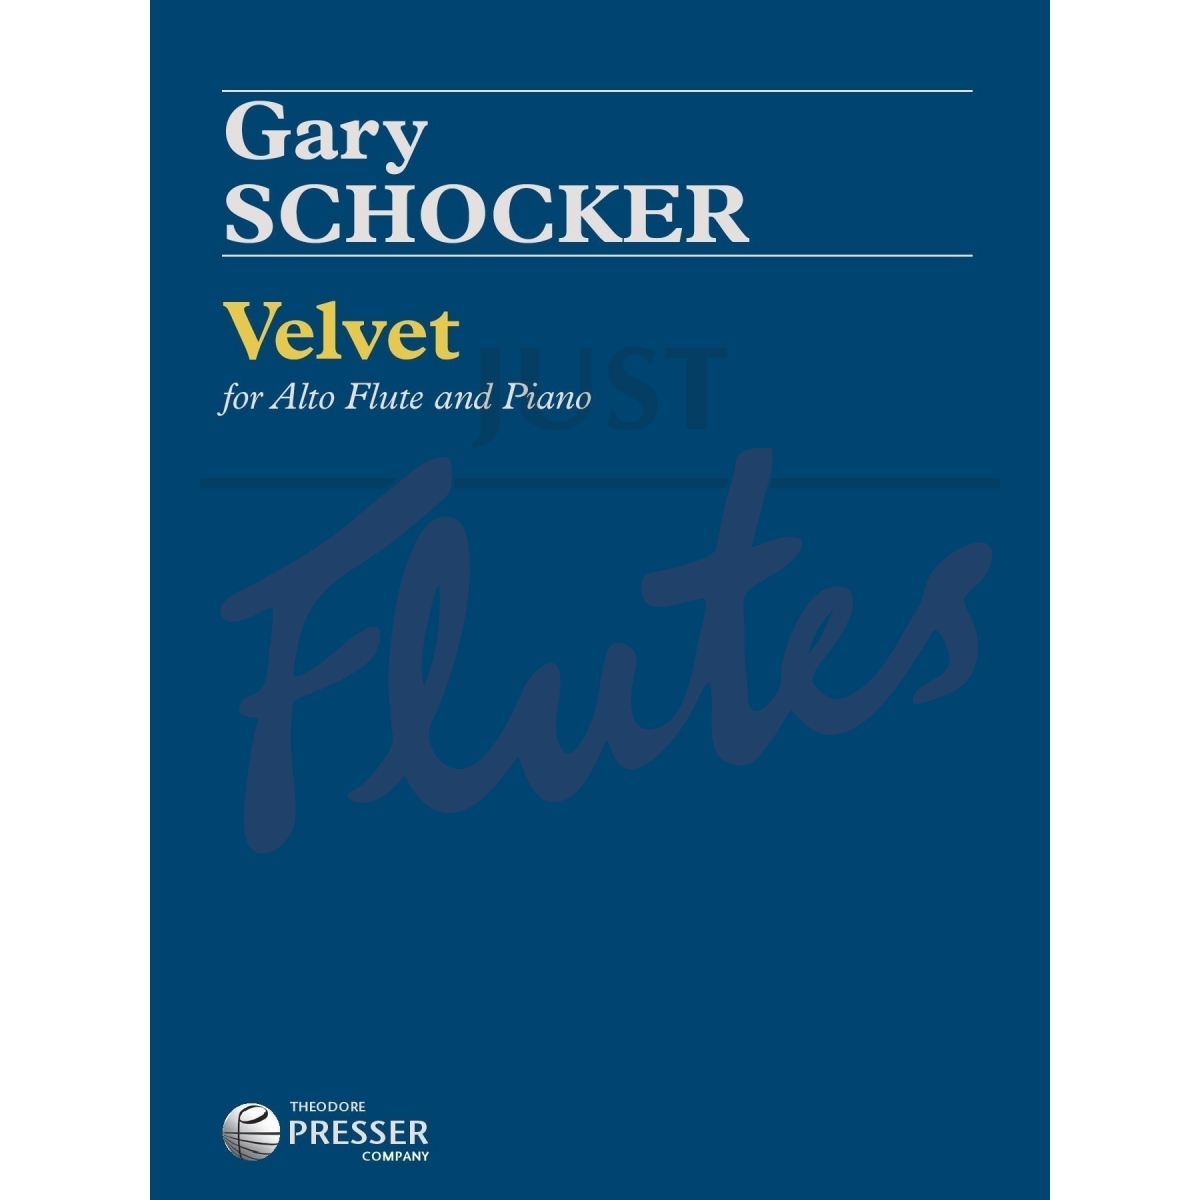 Velvet for Alto Flute and Piano